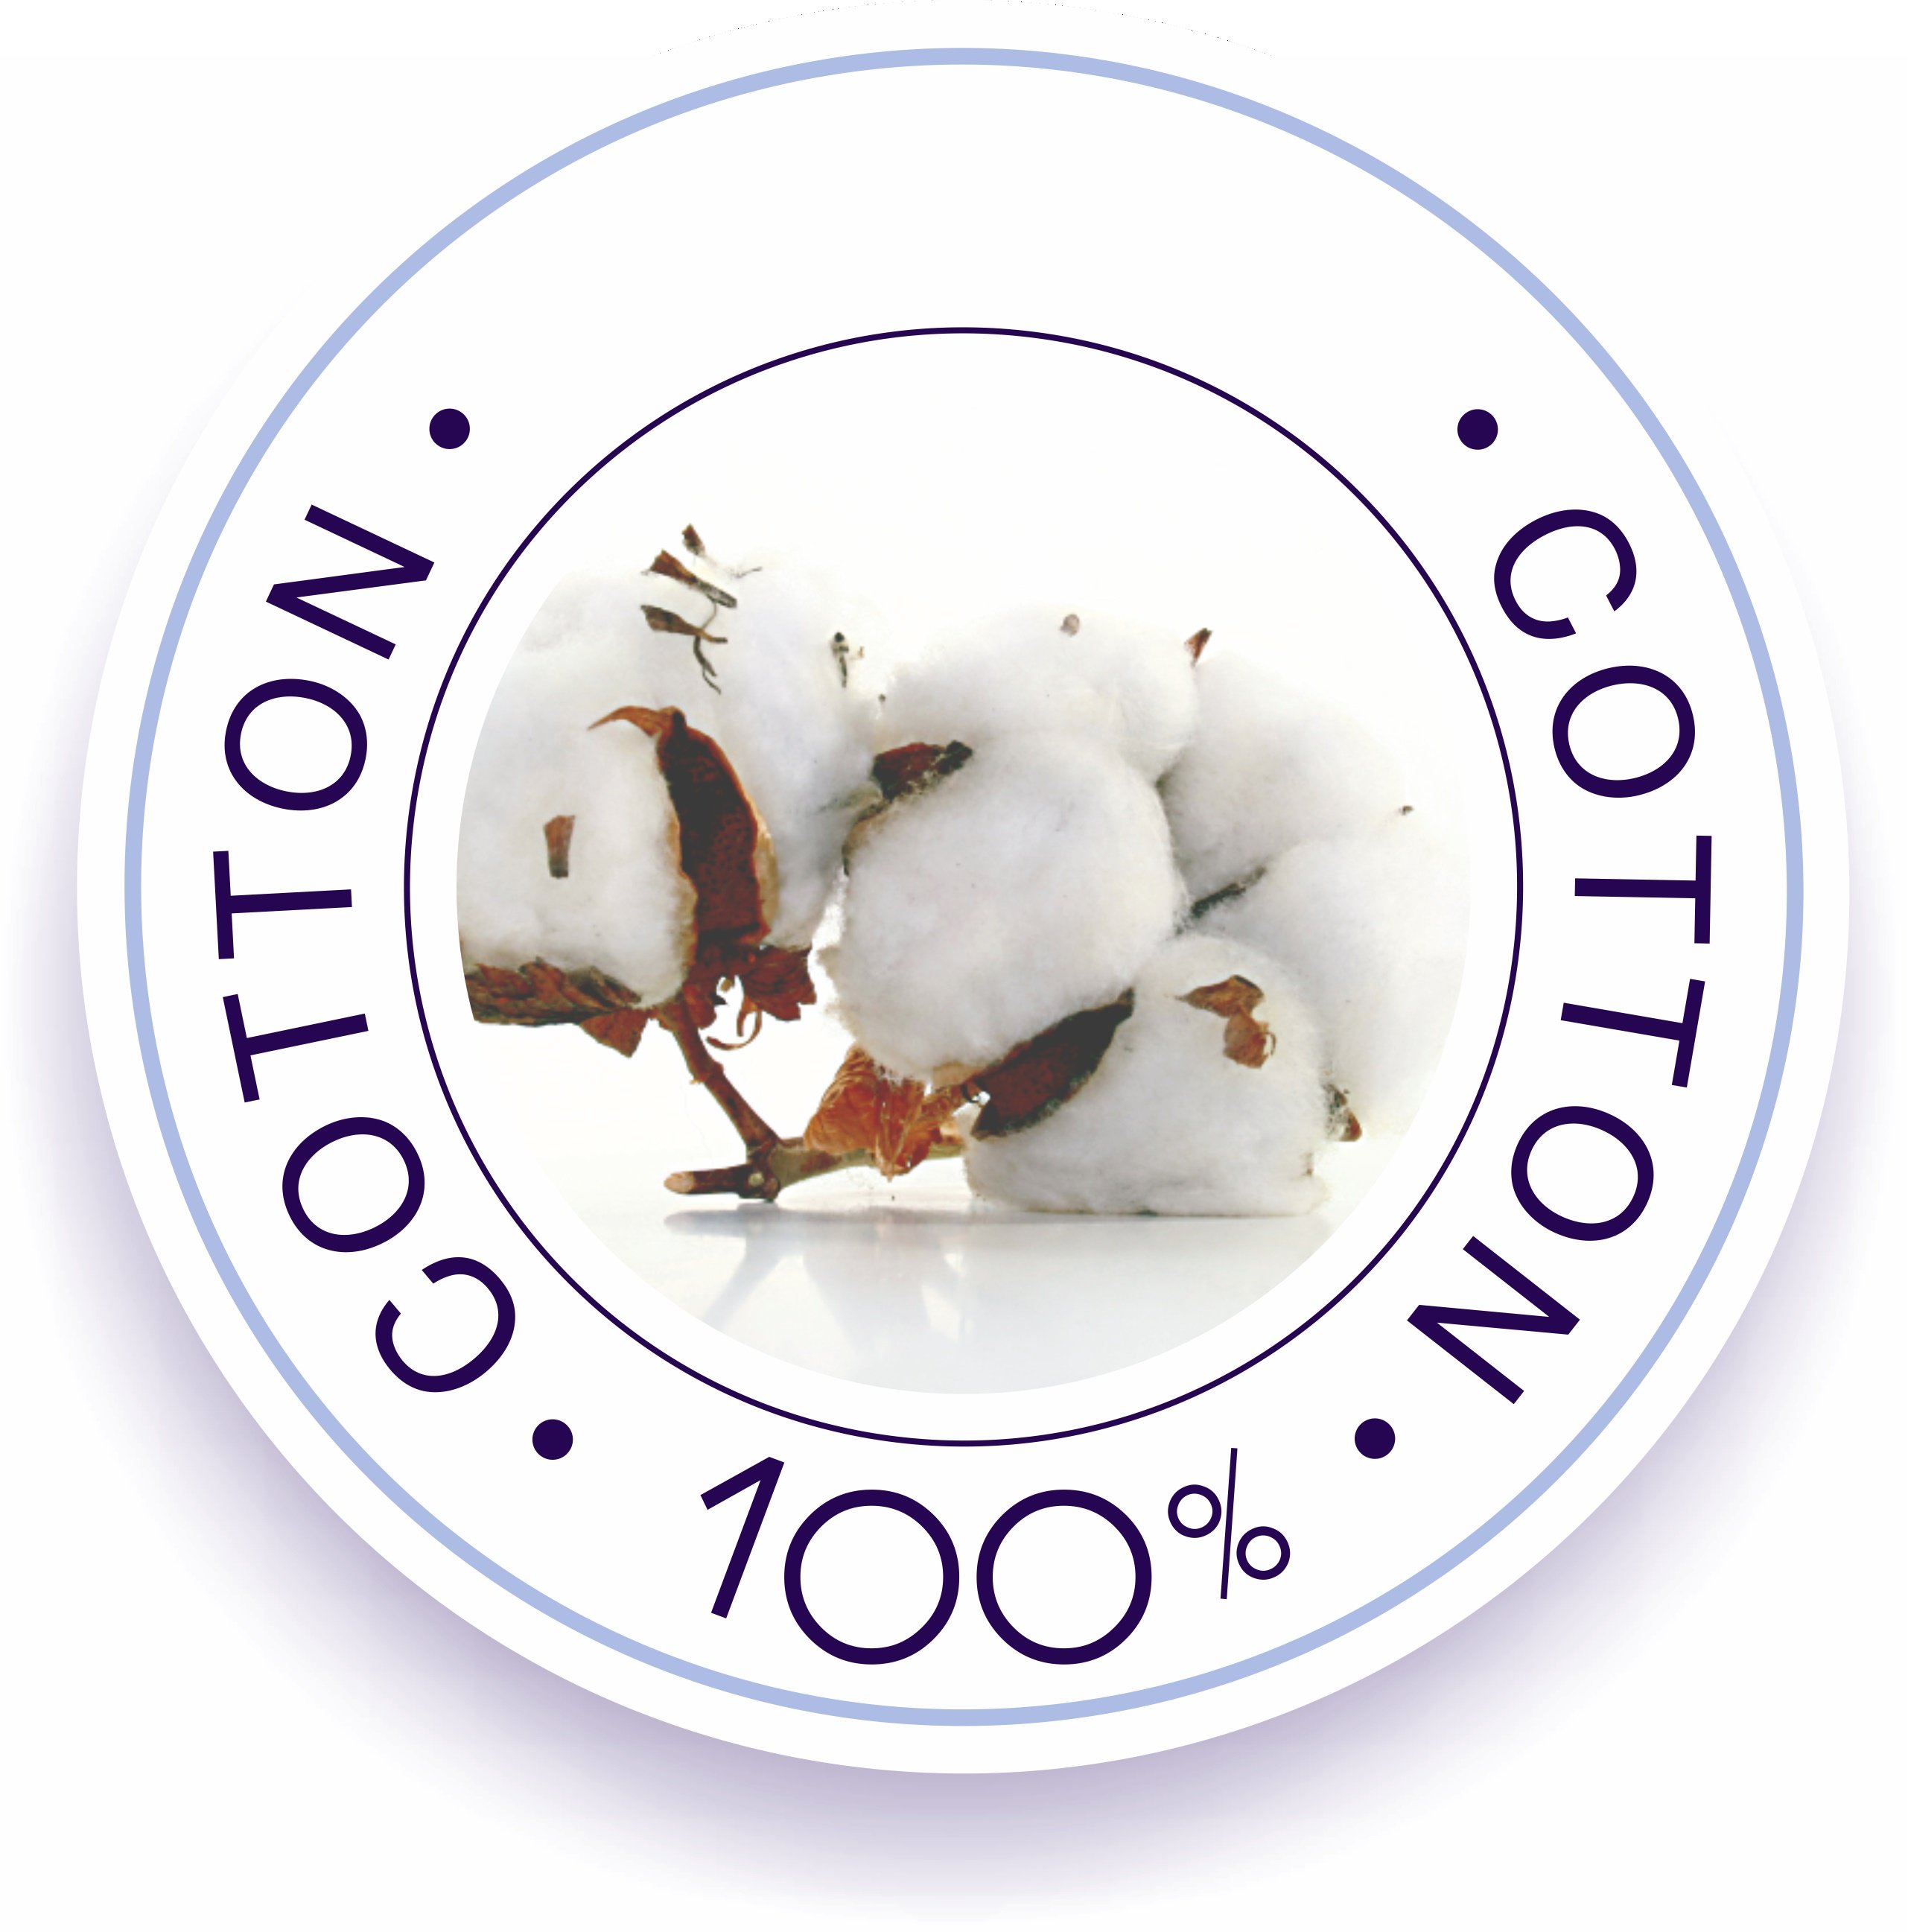 100% cotton